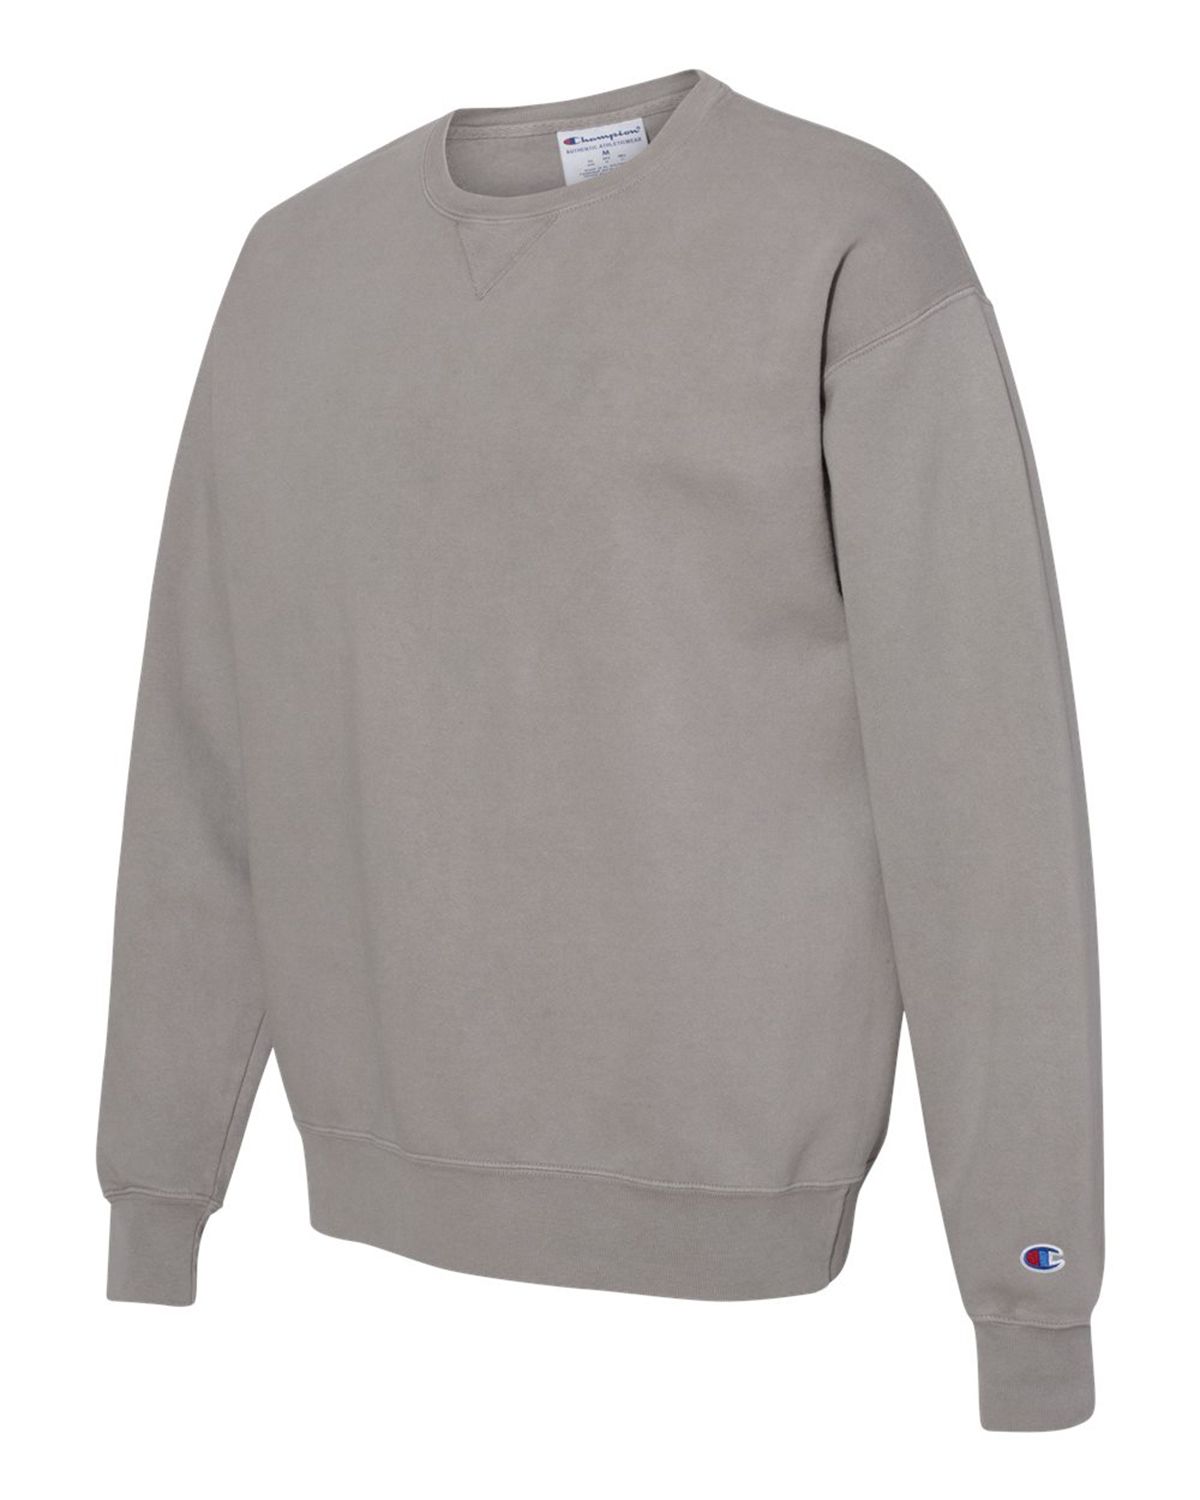 Champion CD400 Garment Dyed Crewneck Sweatshirt - Free Shipping Available